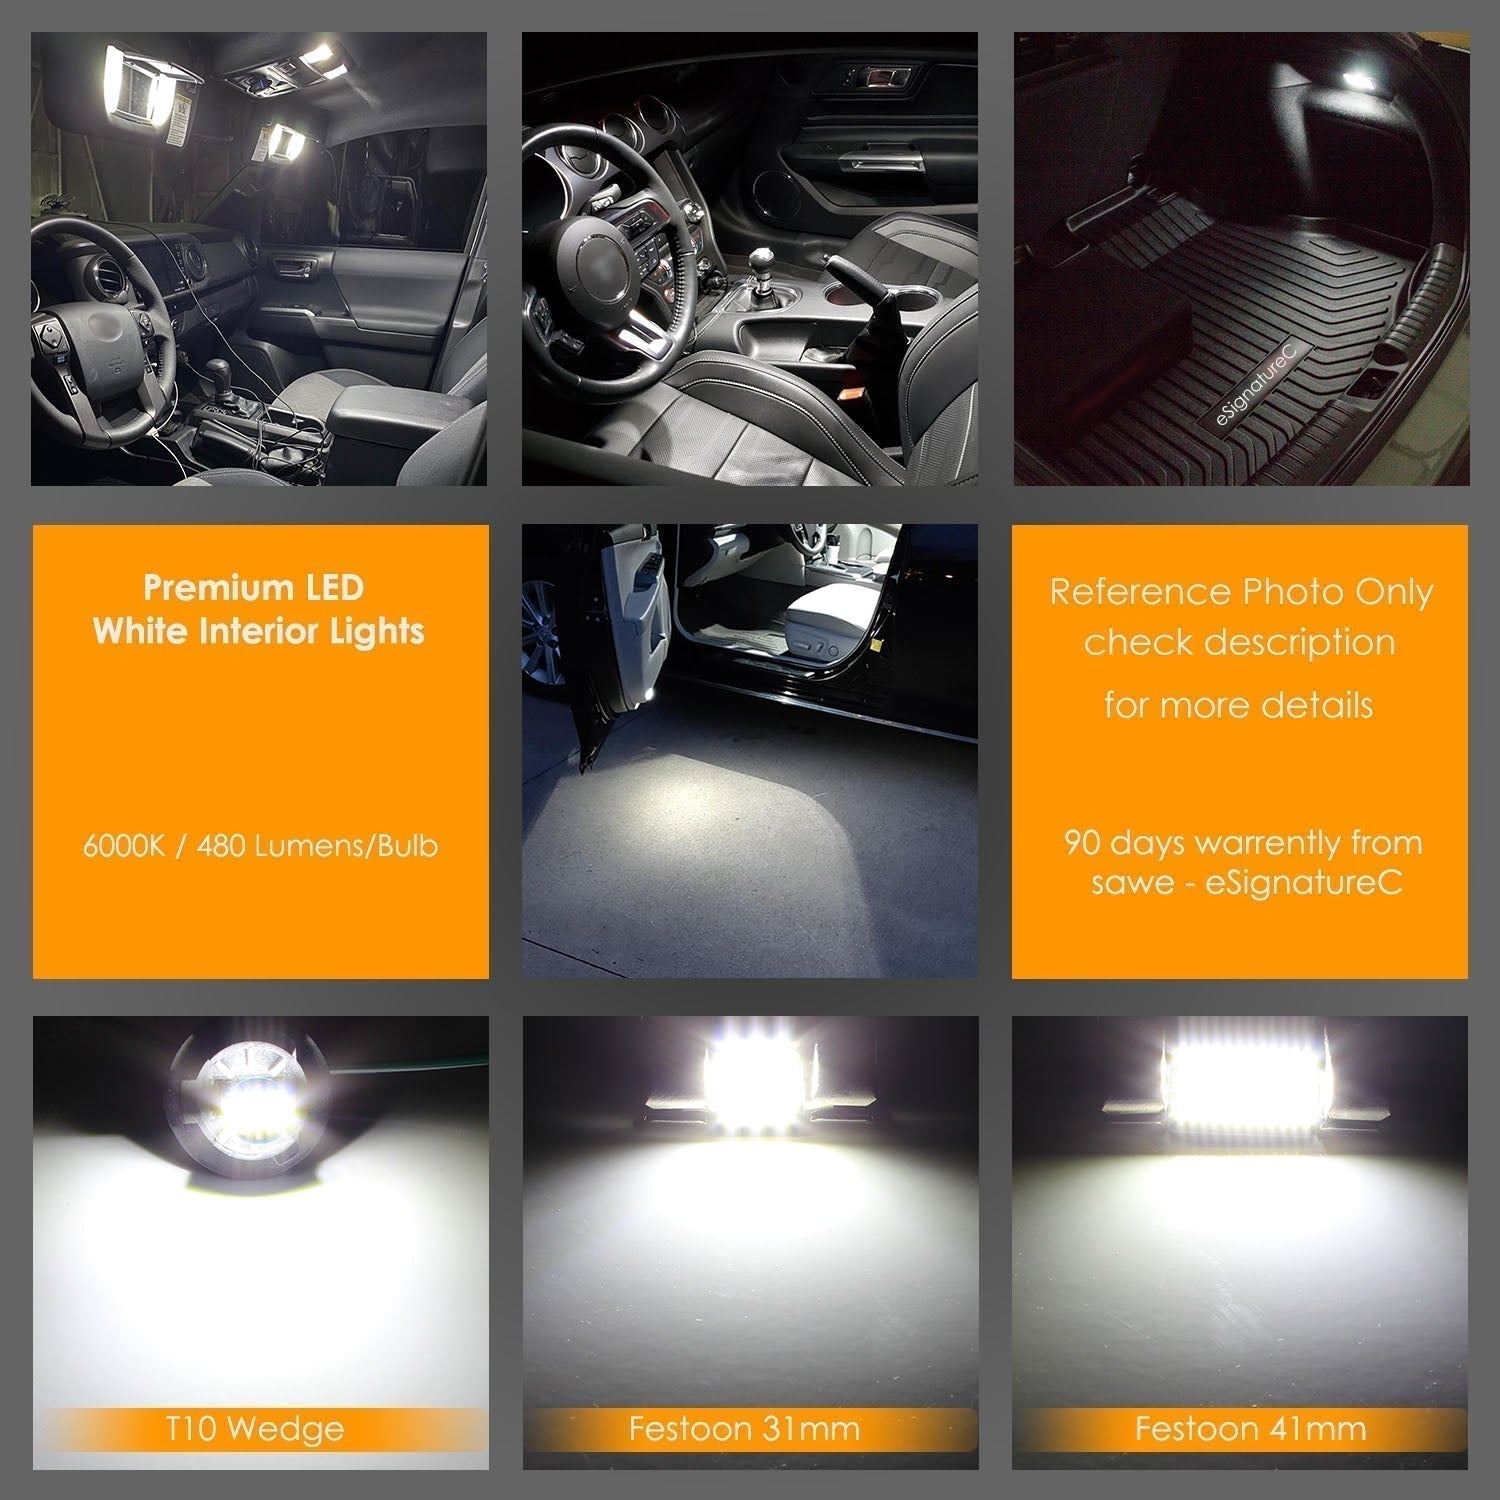 For Volkswagen Golf GTi Interior LED Lights - Dome & Map Light Bulbs Package Kit for 2006 - 2009 - White